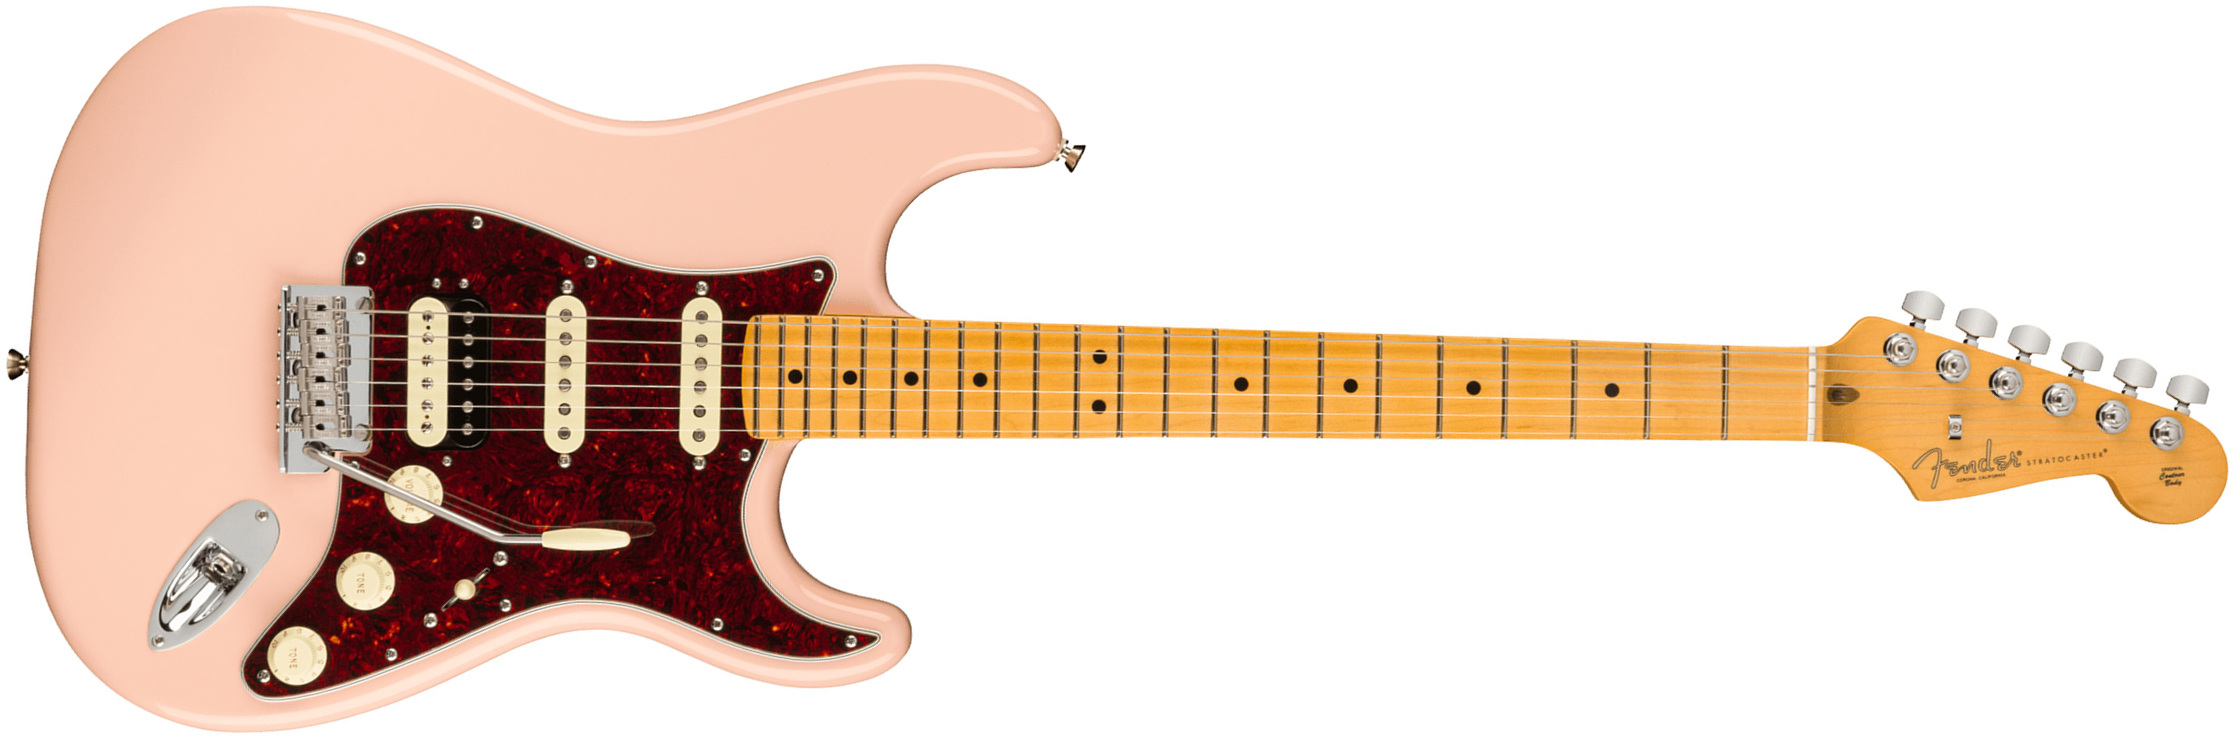 Fender Strat American Pro Ii Ltd Hss Trem Mn - Shell Pink - Guitarra eléctrica con forma de str. - Main picture